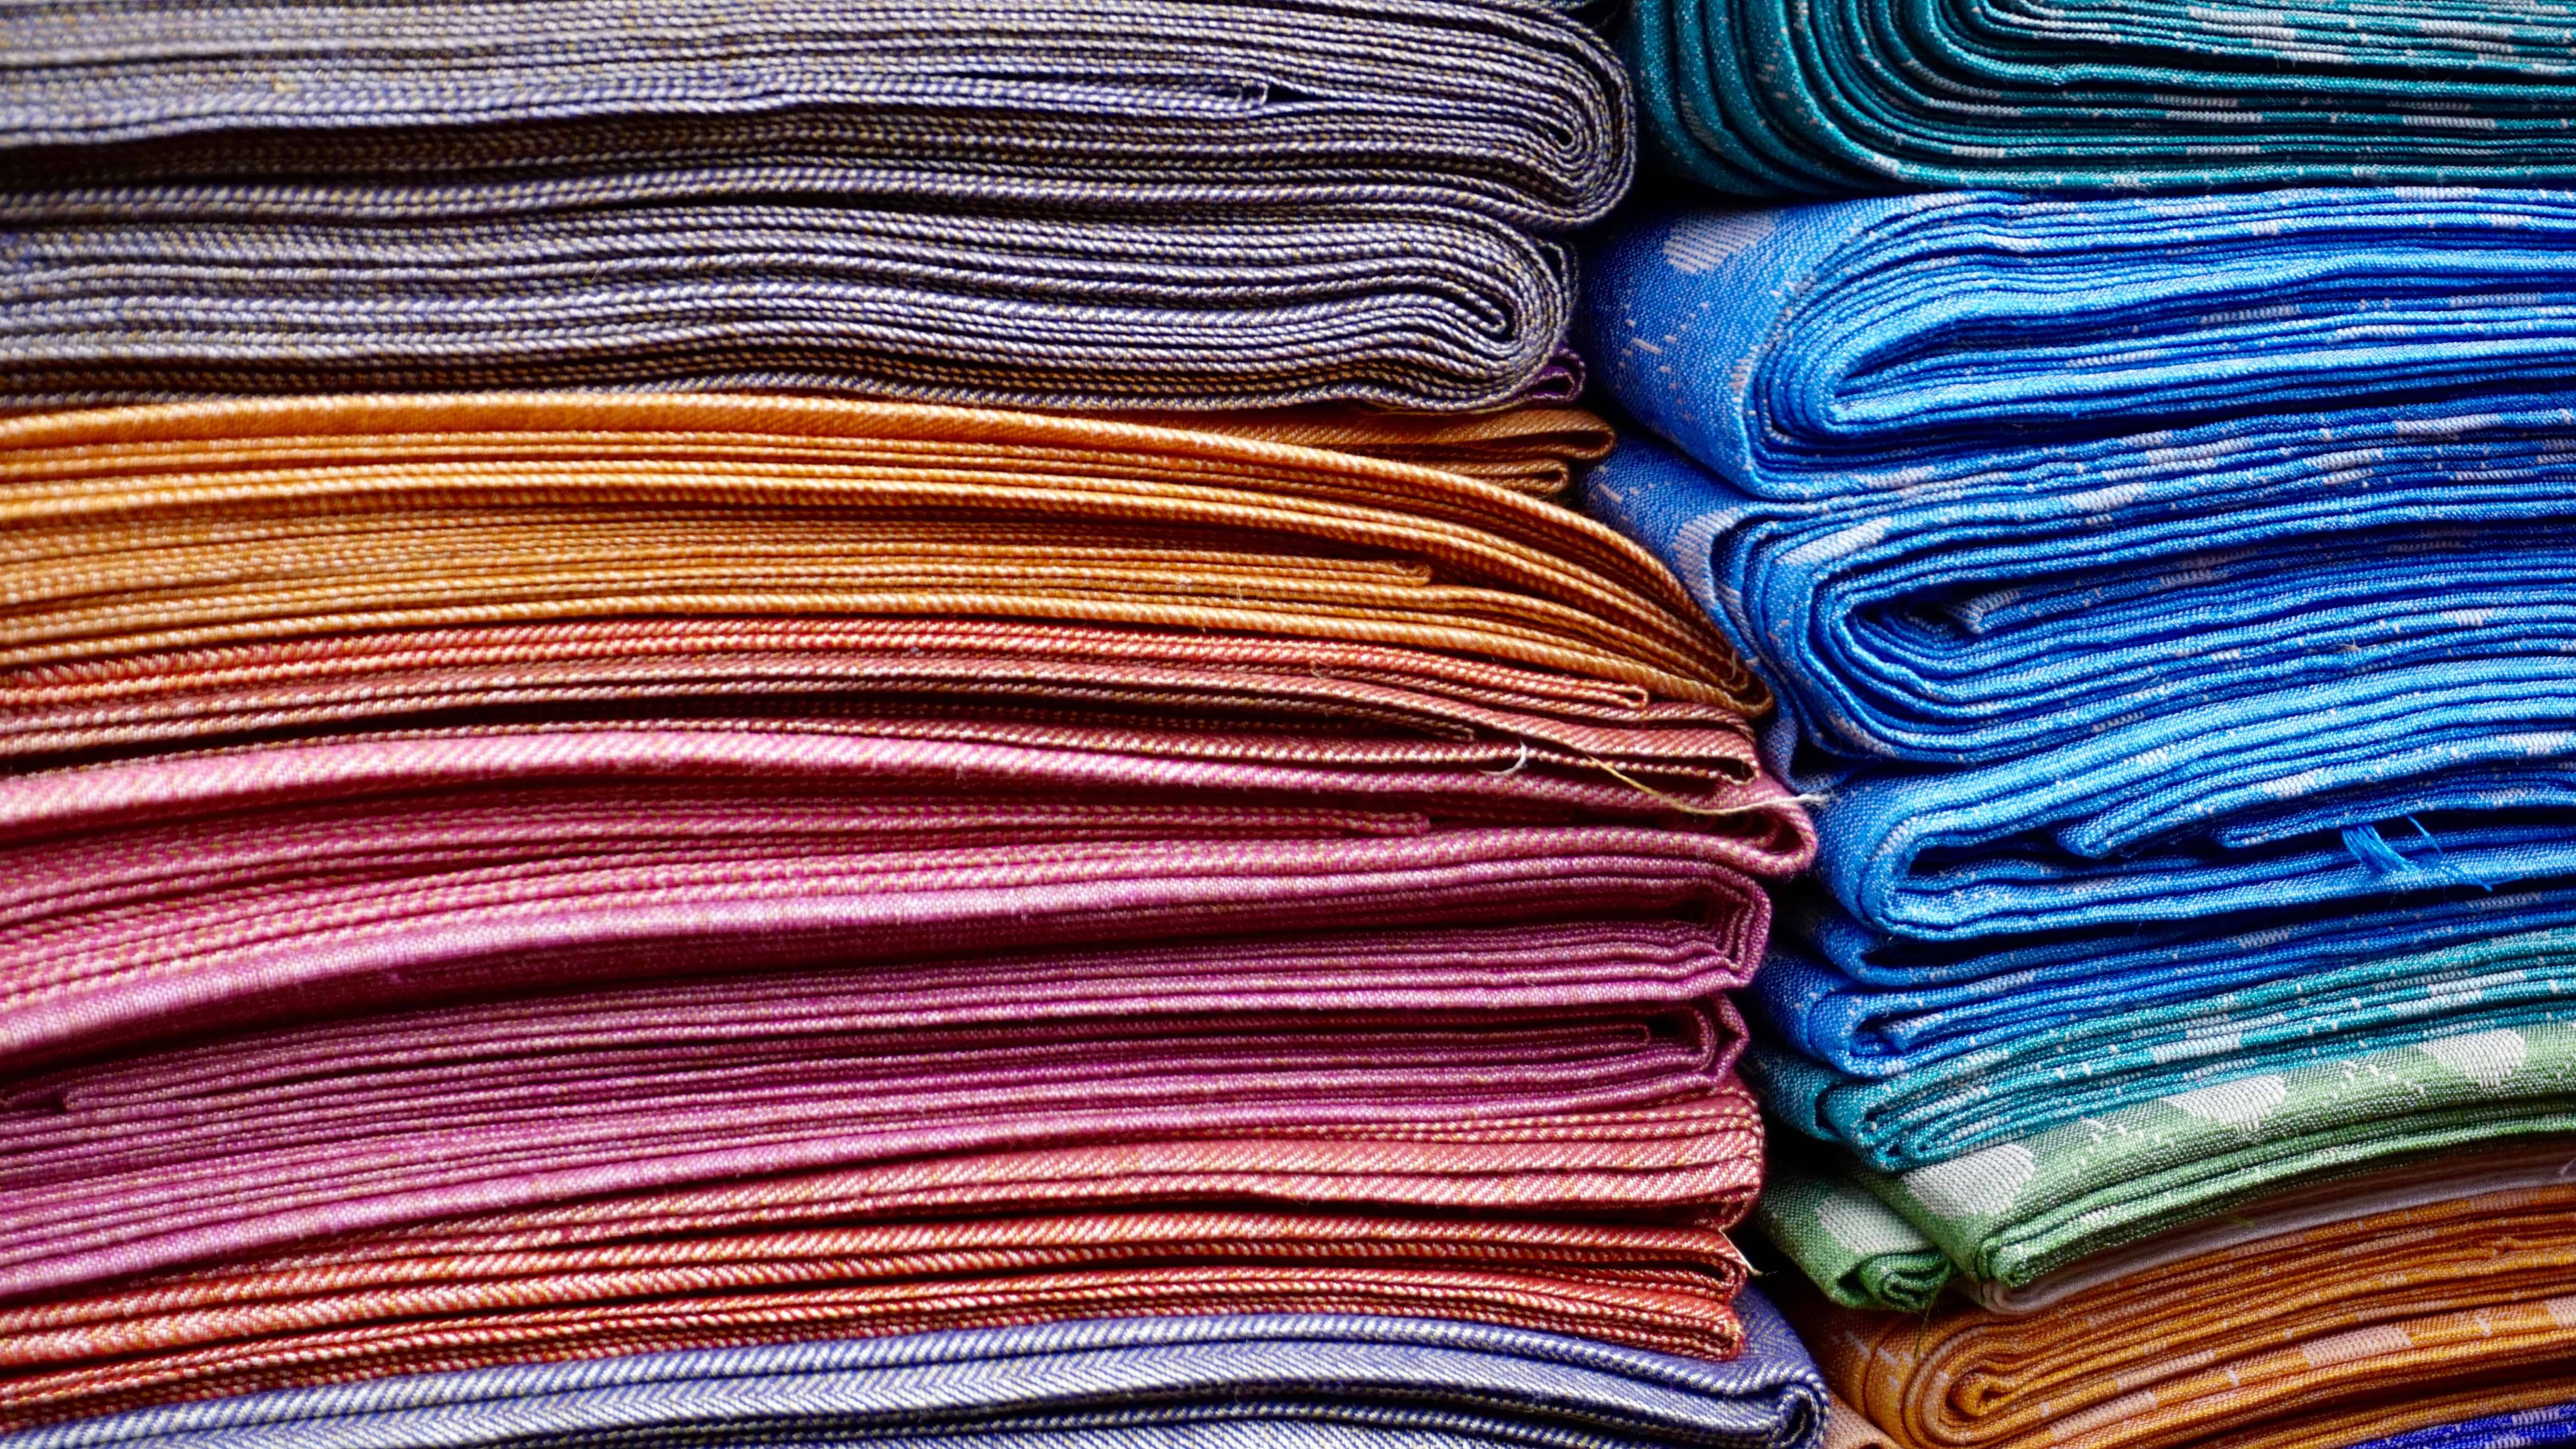 colorful fabric cloth